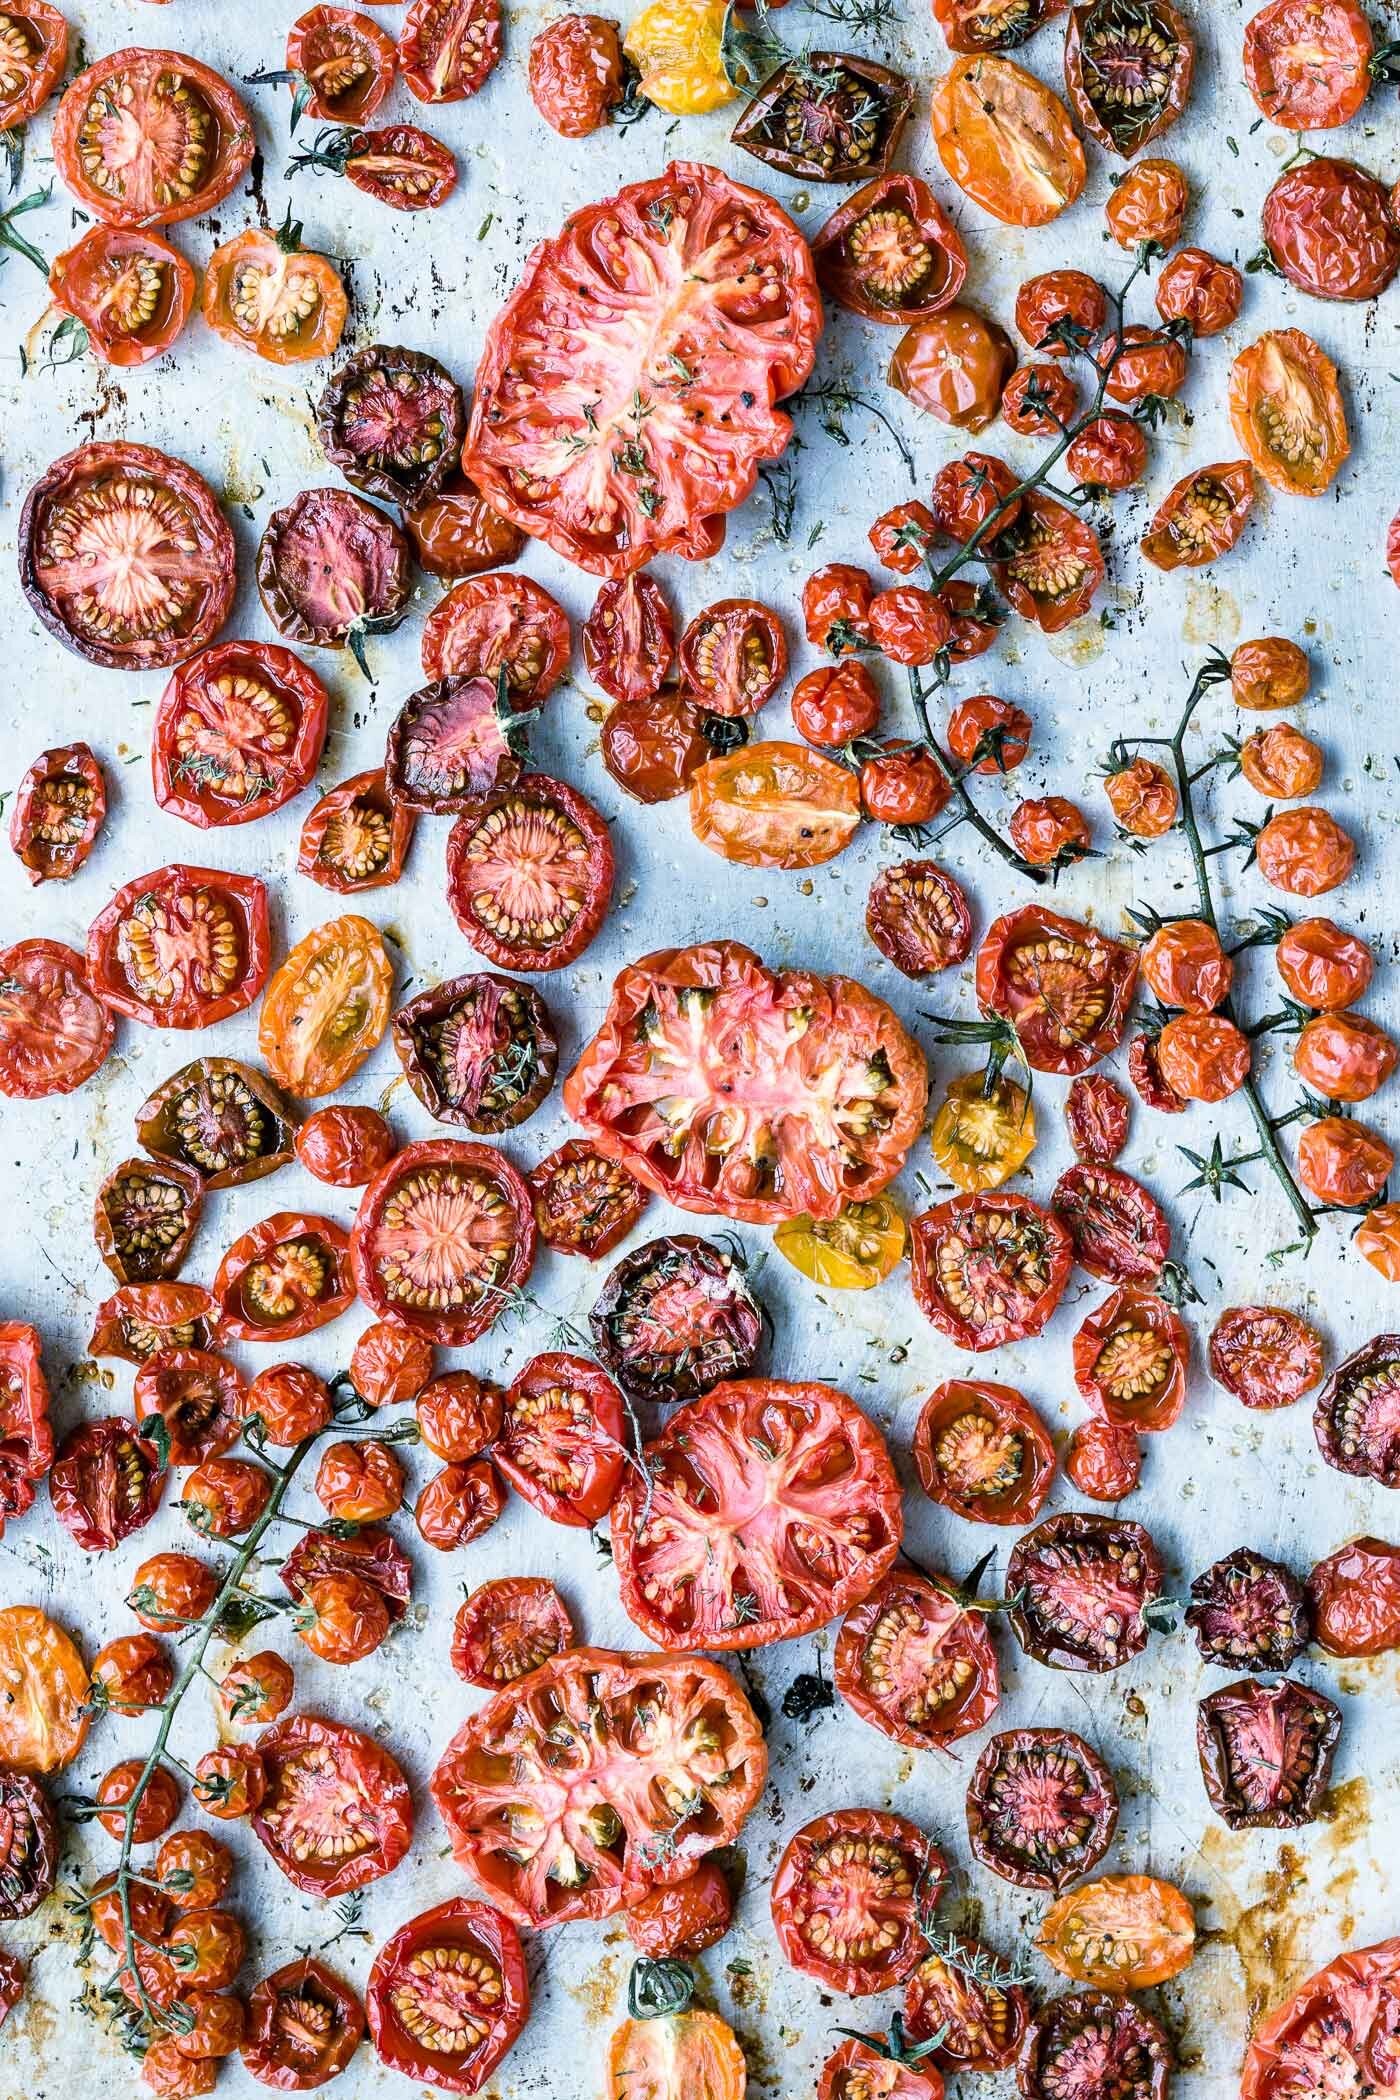 ofengetrocknete-tomaten-auf-backblech-tomaten-rezepte-veggielicious-food-fotografie-01-dt-hoch.jpg